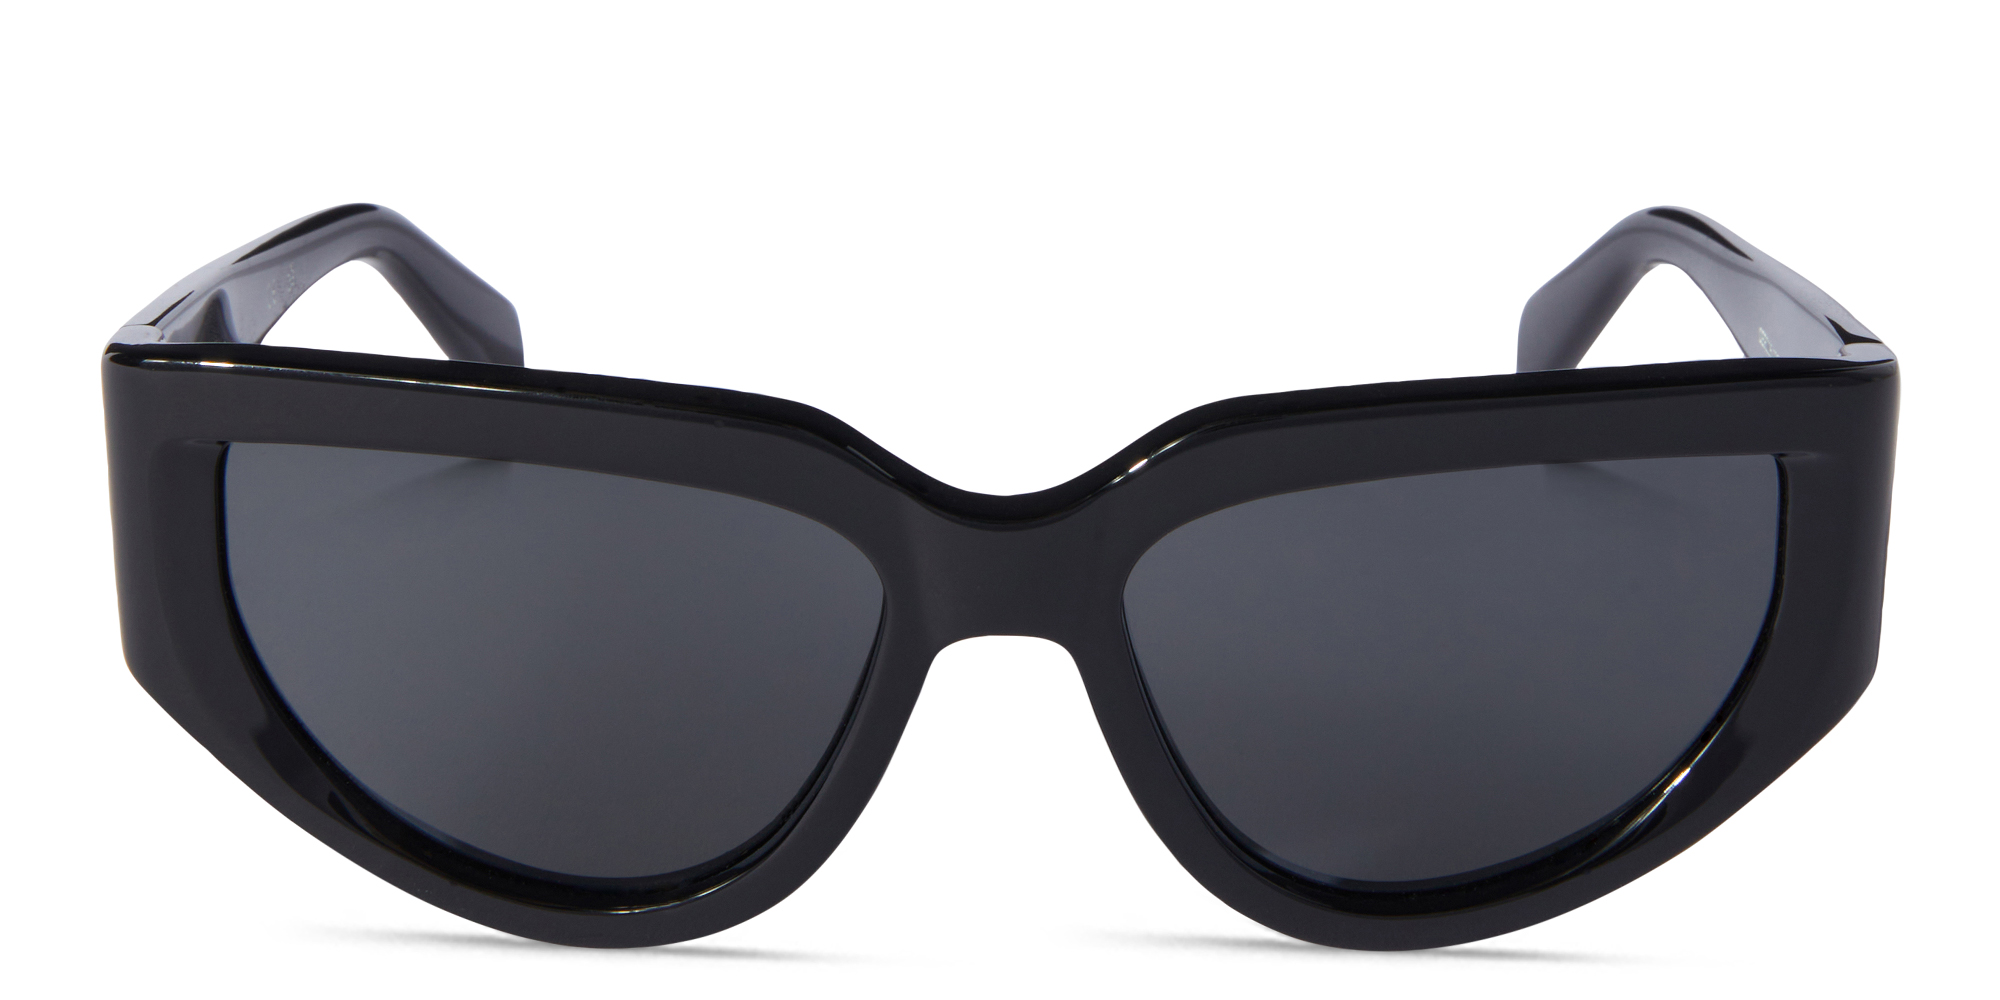 

Seward Unisex Cat-Eye Sunglasses, Black